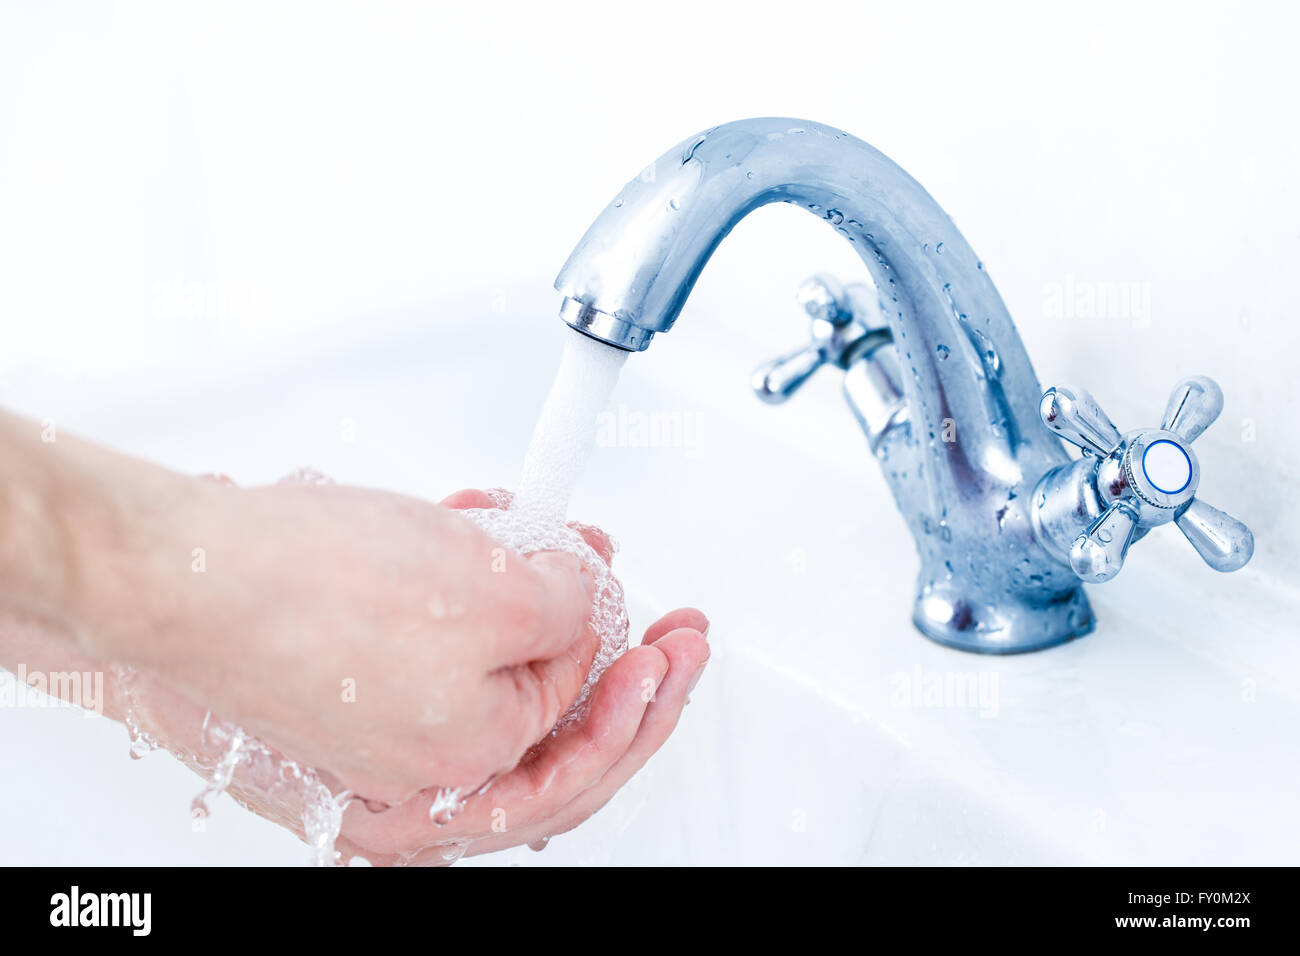 Washing hands under running water tap closeup Stock Photo